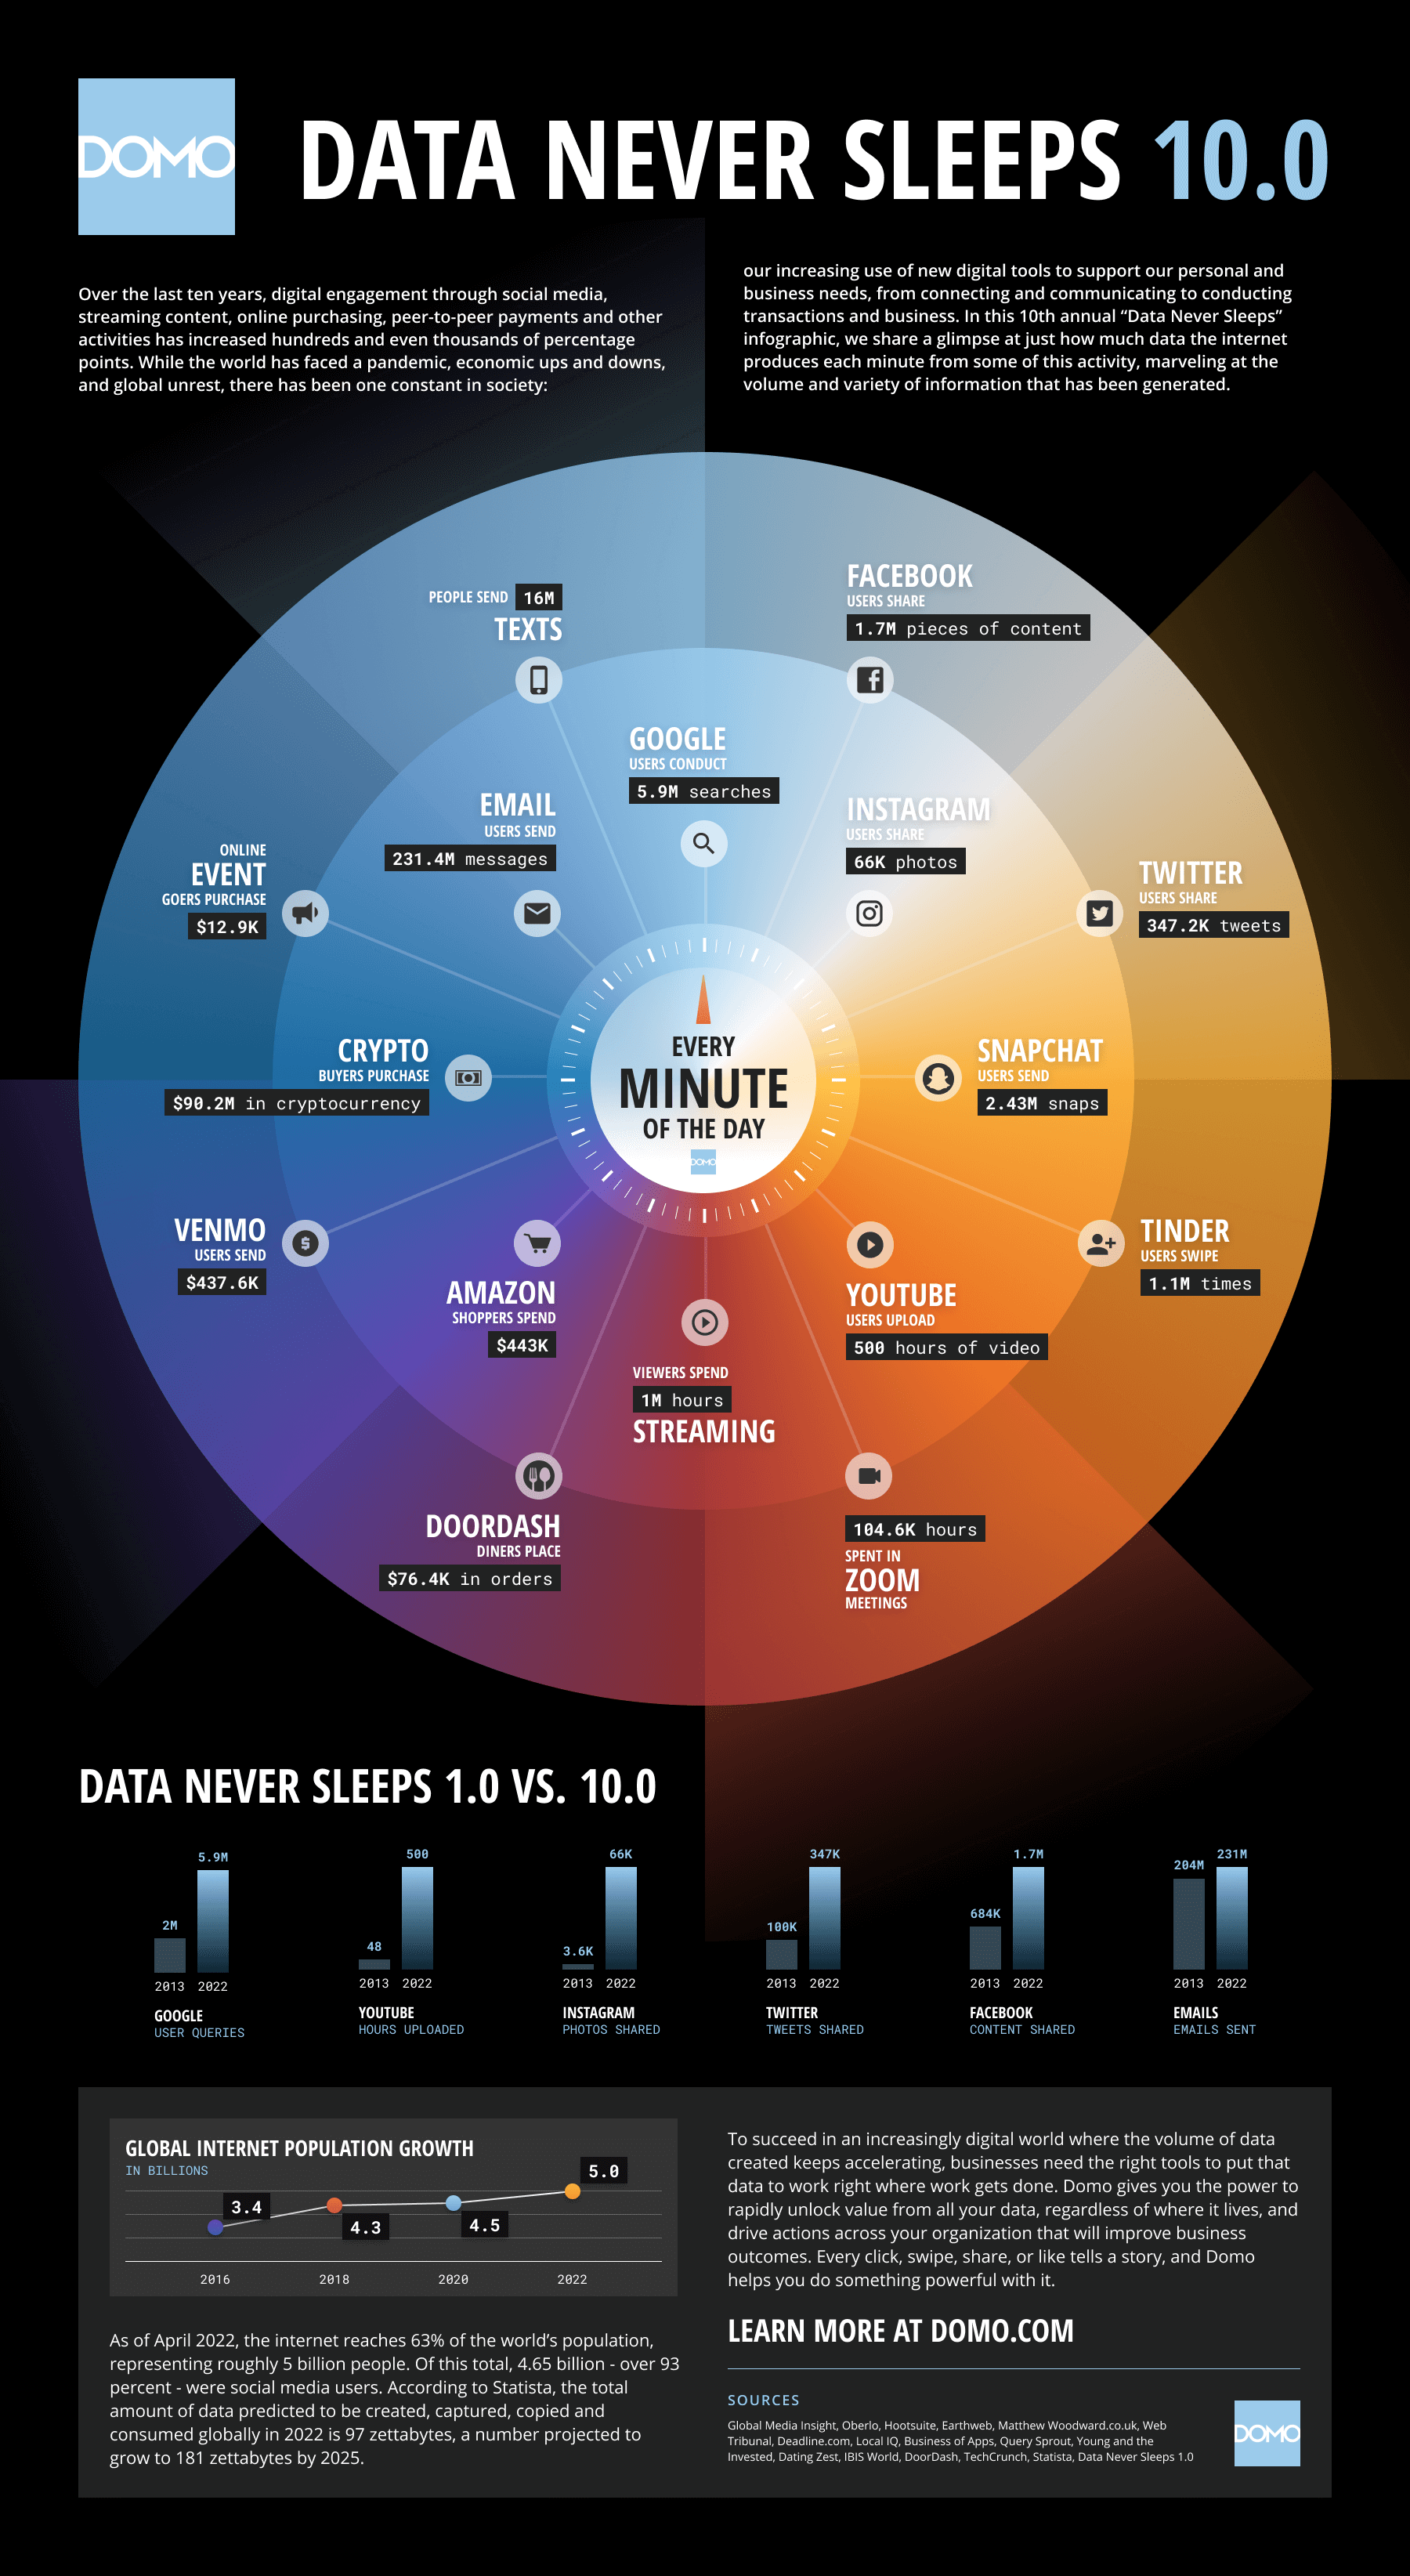 Domo Data Never Sleeps infographic